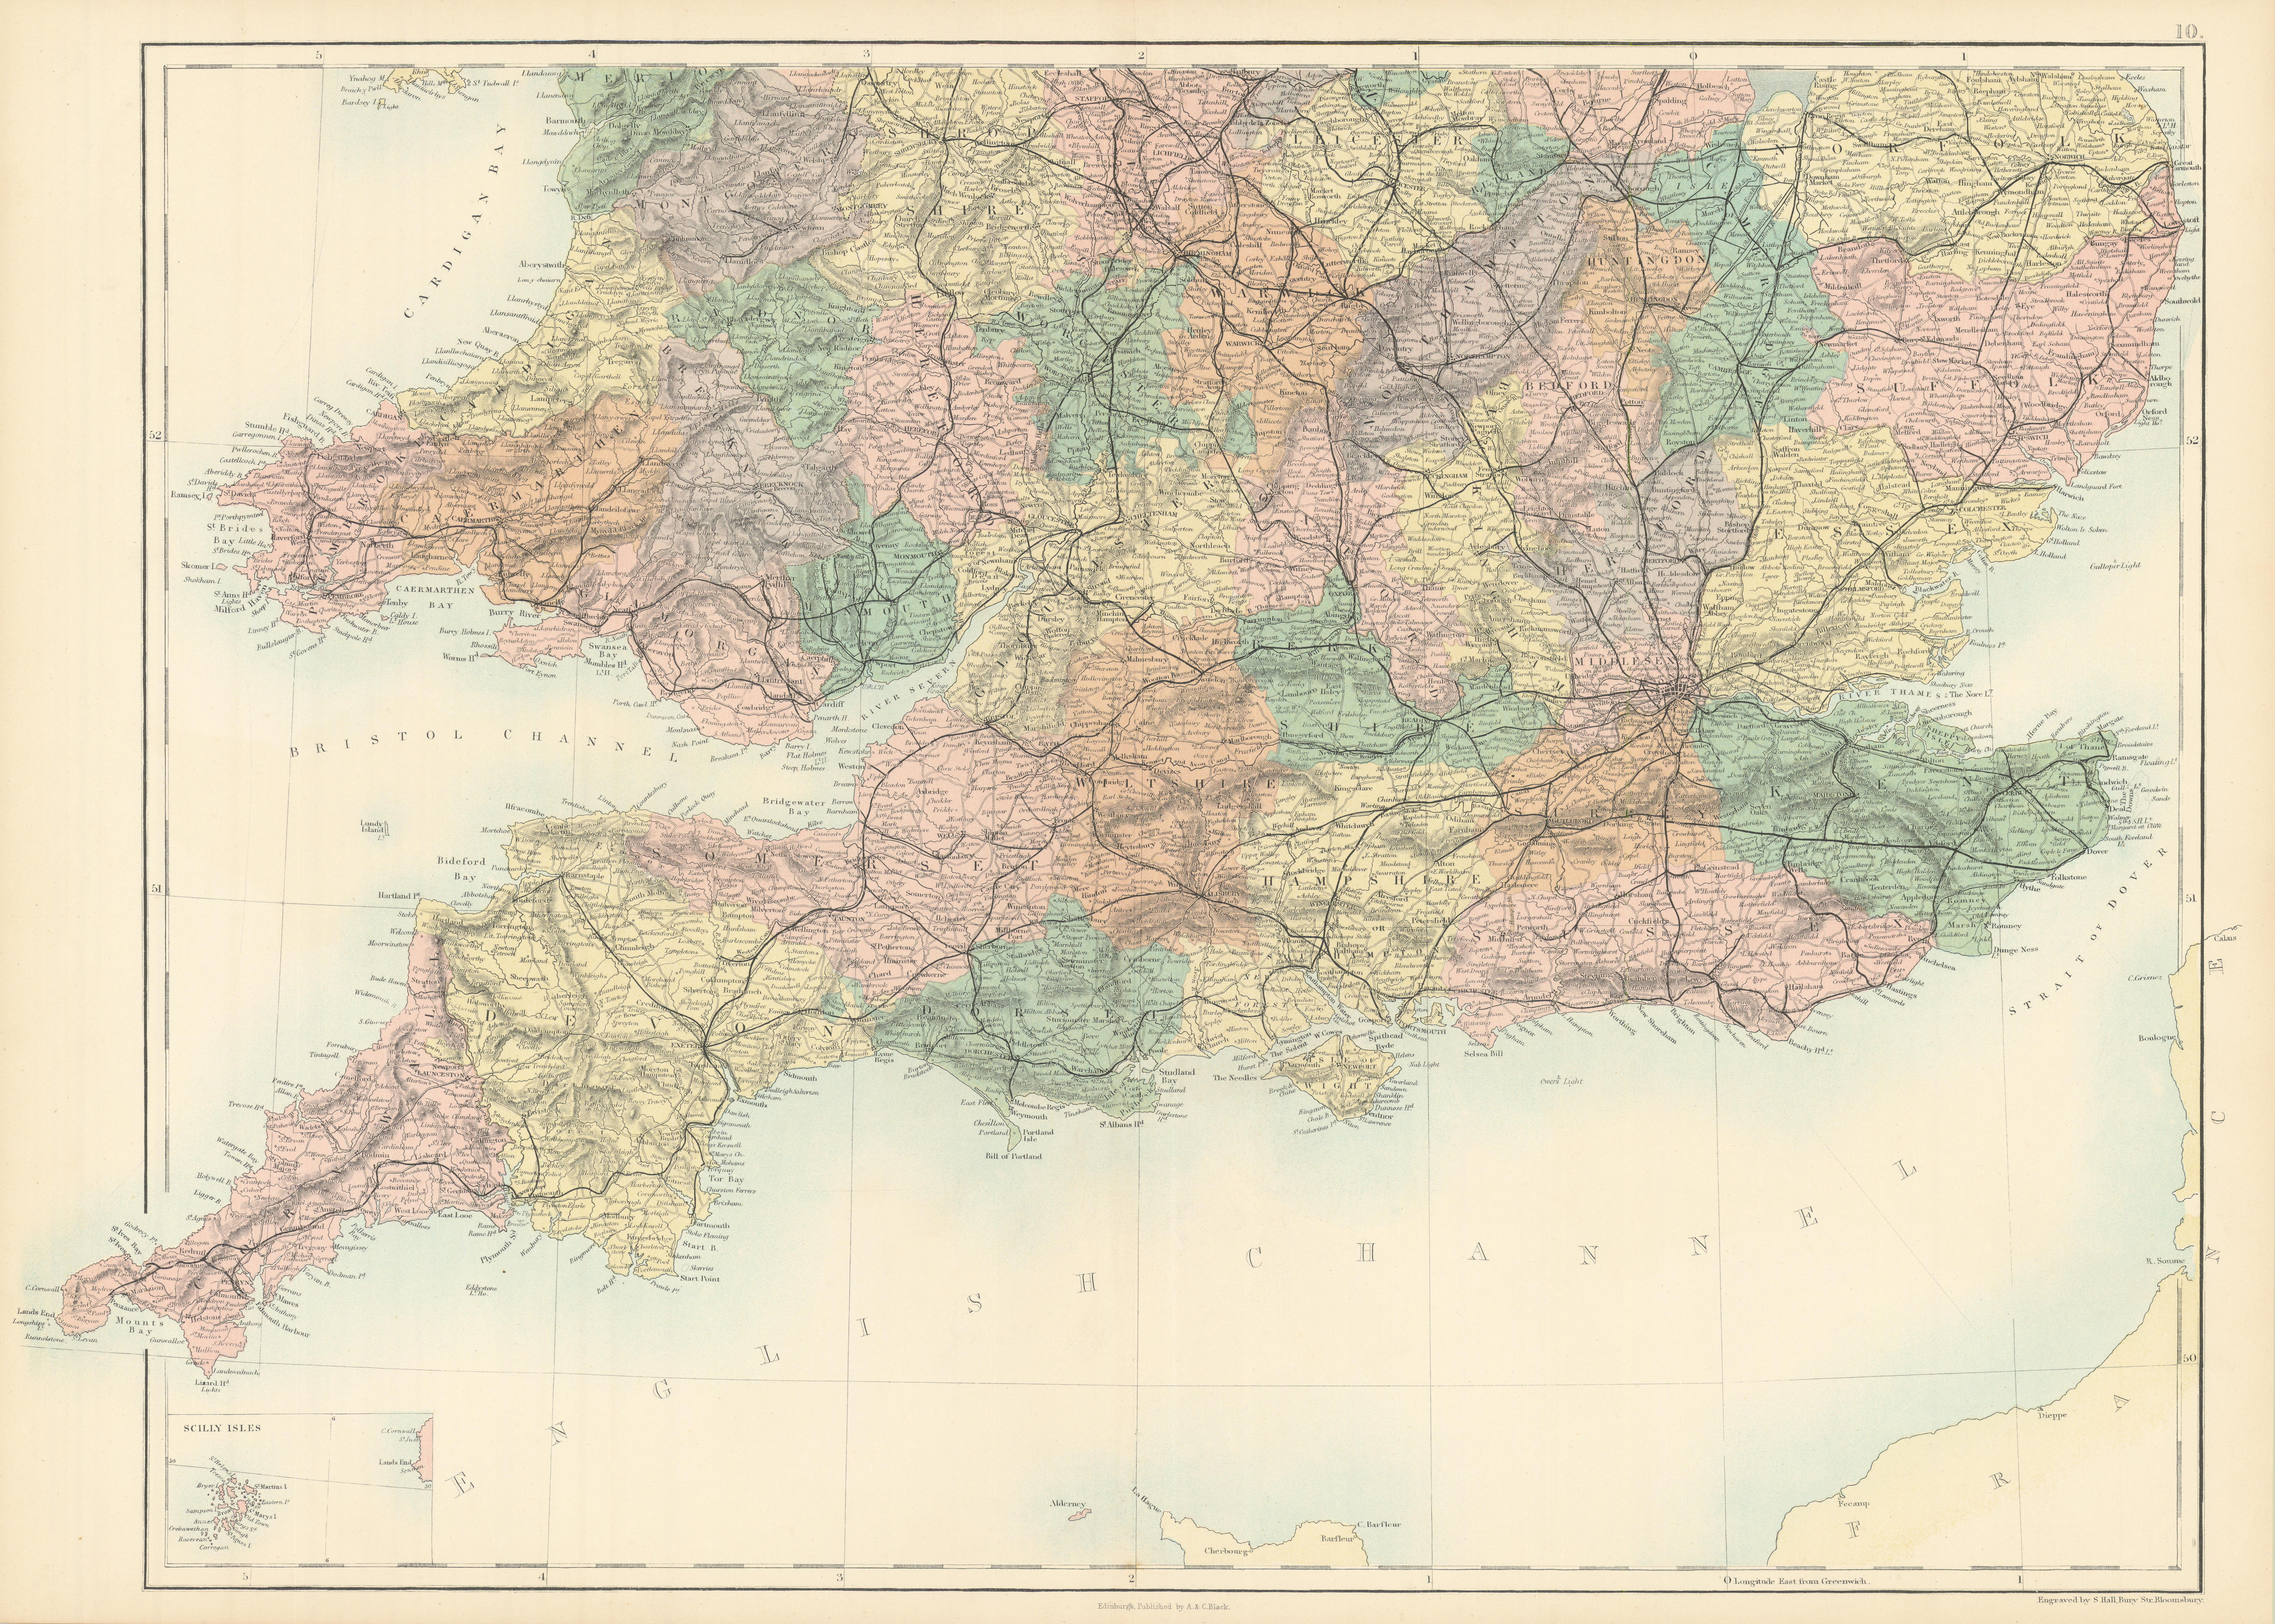 England & Wales South Sheet. Counties & railways. BARTHOLOMEW 1862 old map